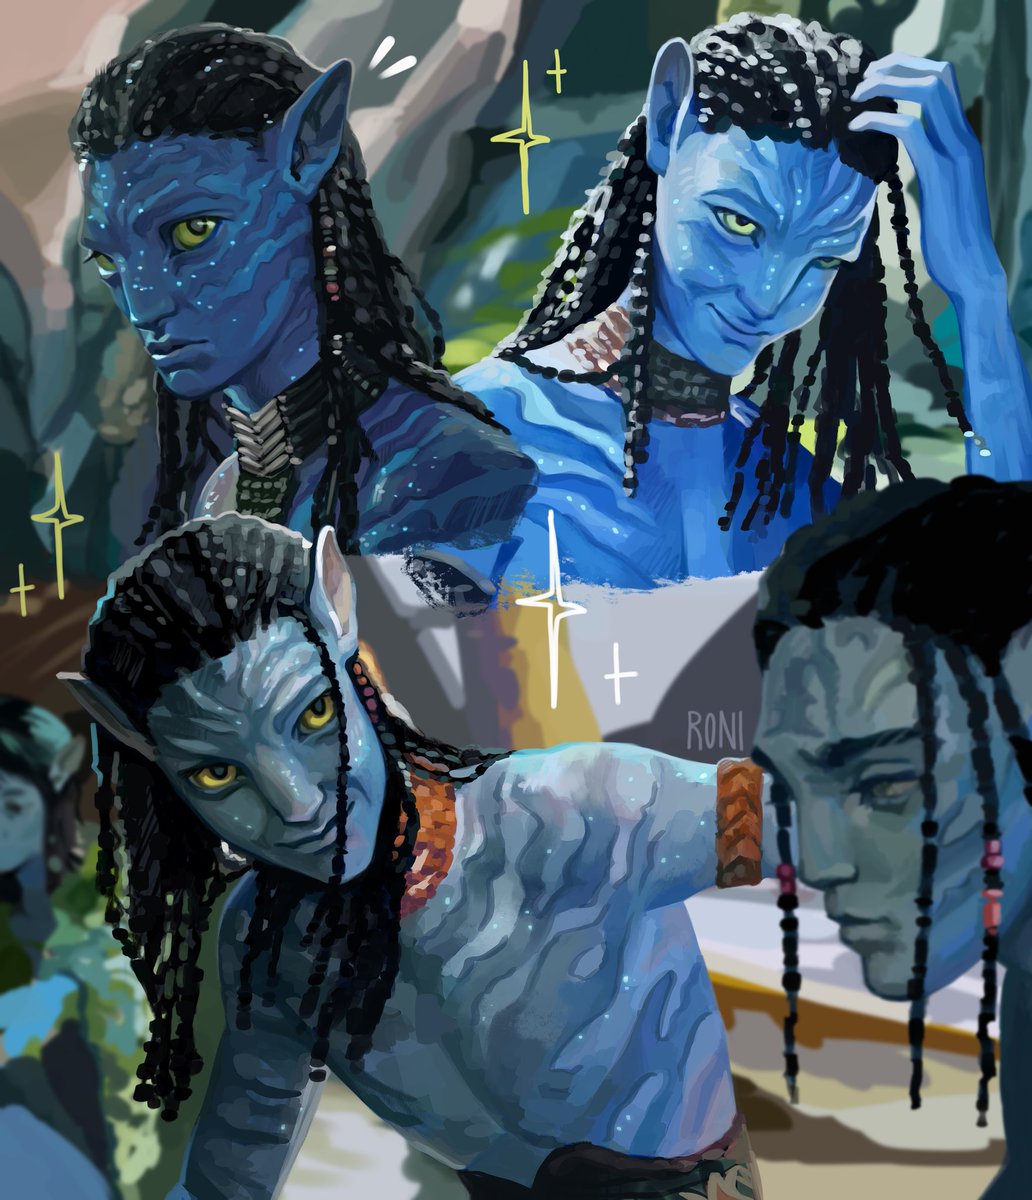 Finally NETEYAM🤲
.
#Avatar2 #AvatarTheWayOfWater #avatarfanart #Neteyam #neteyamsully #украрт #УкрТві